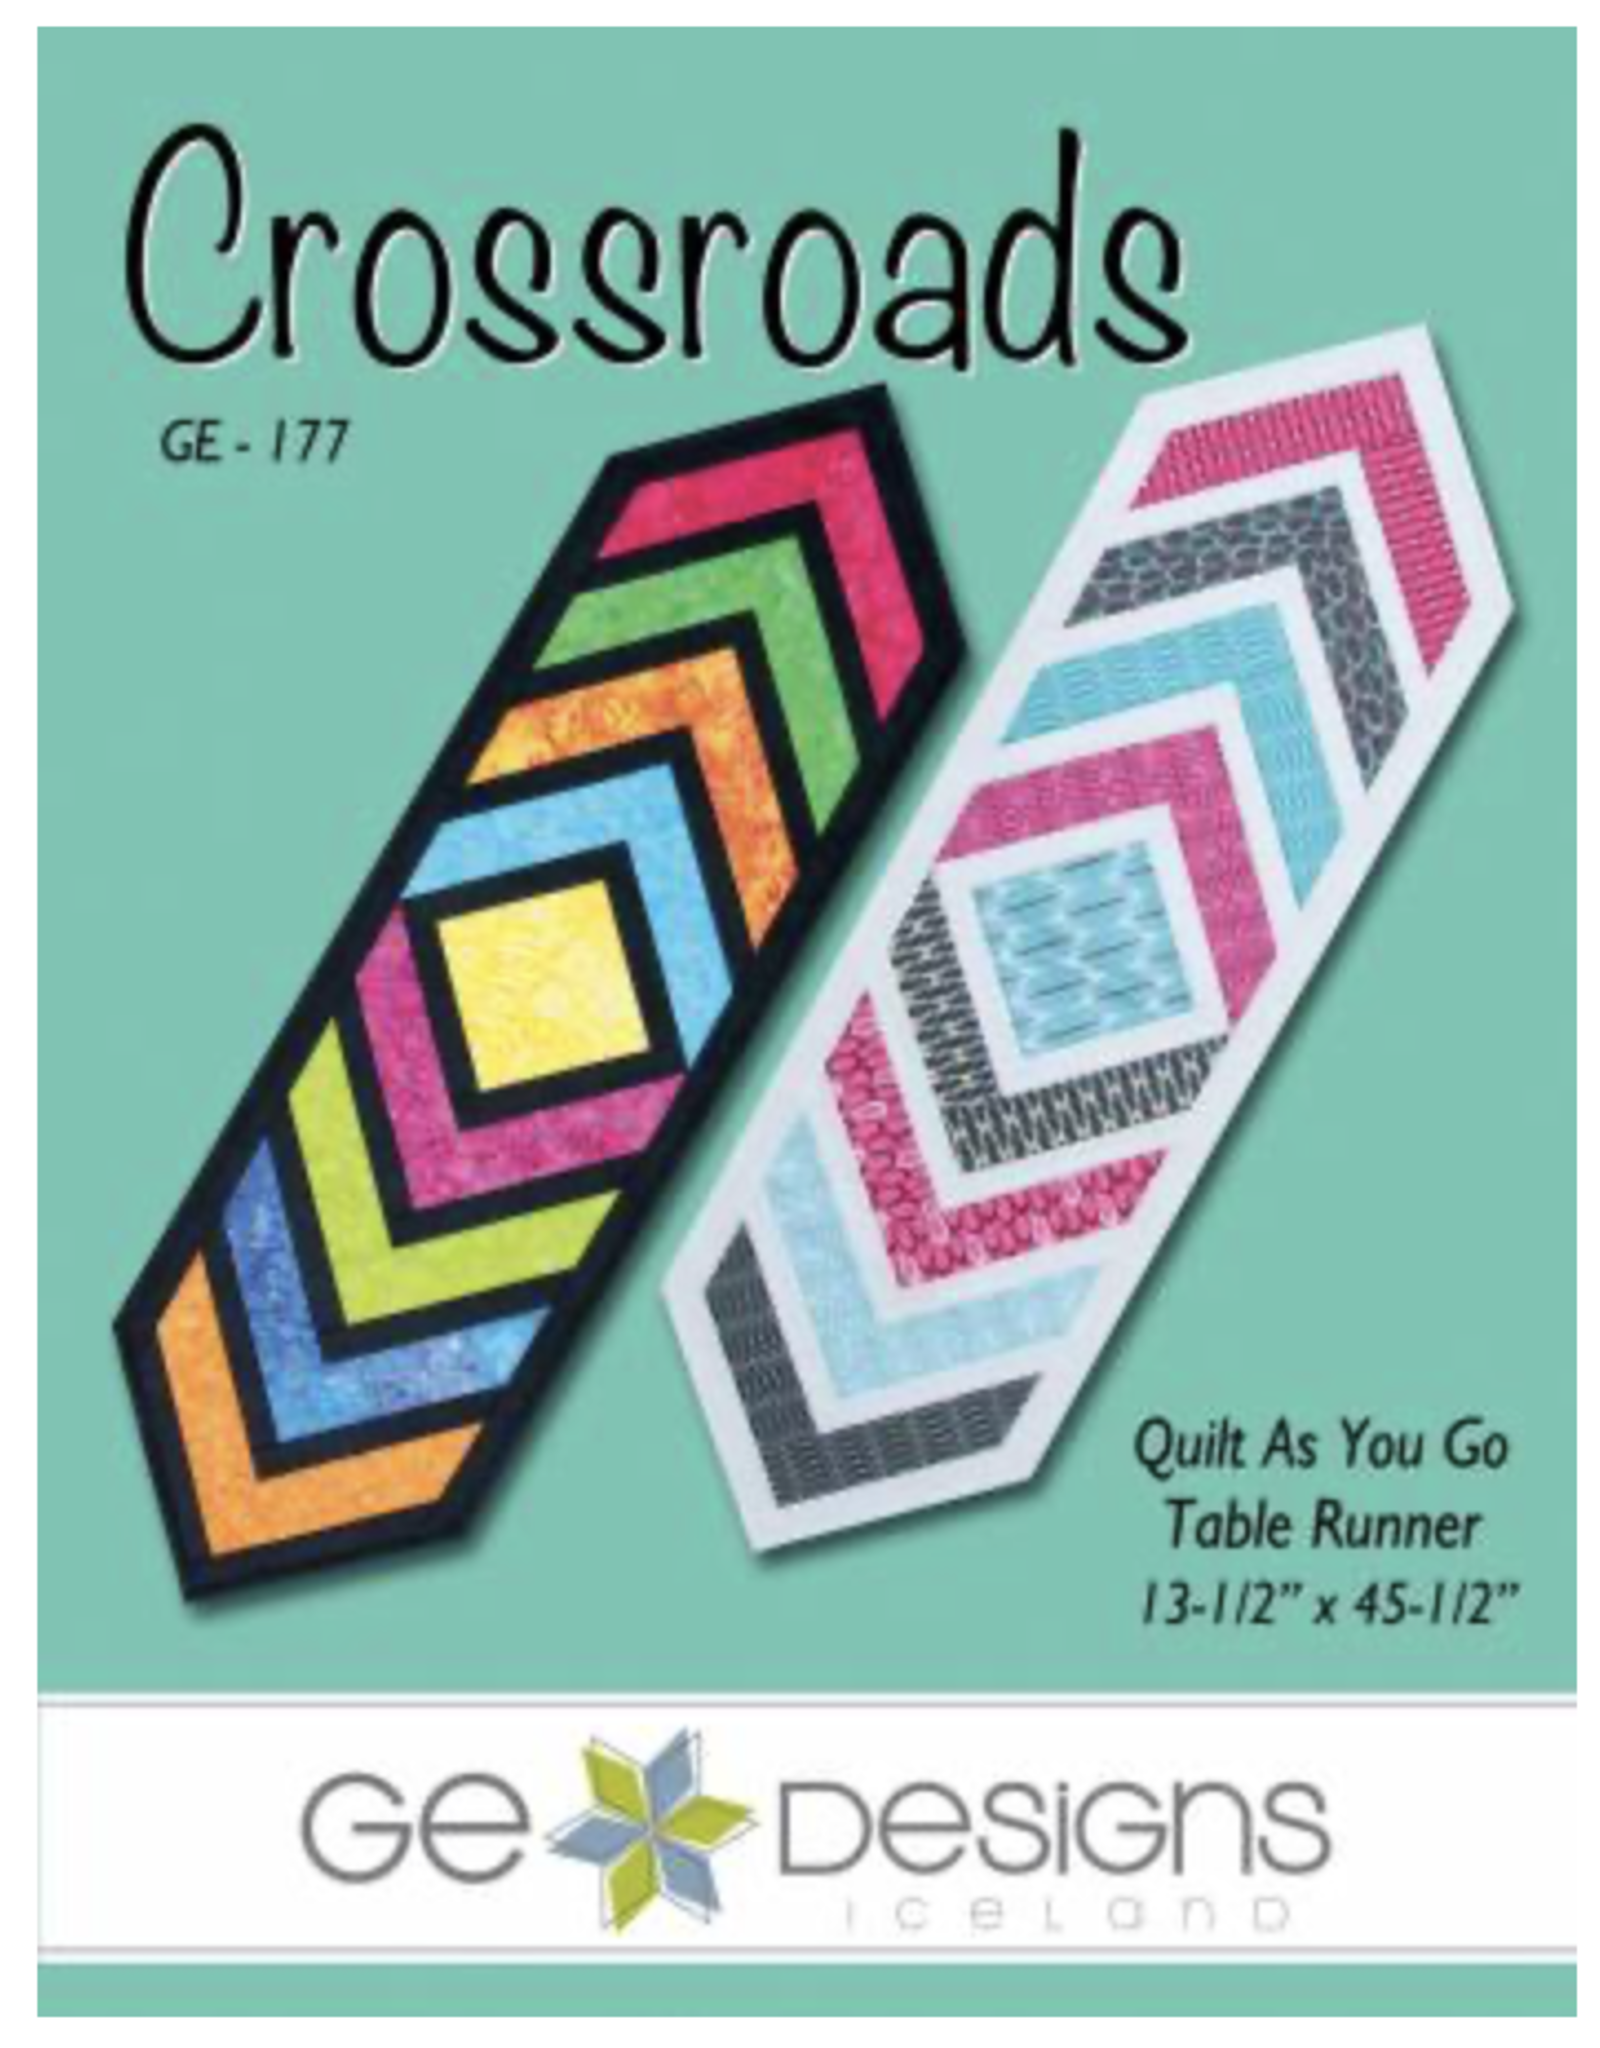 G.E. Designs Crossroads Table Runner Quilt as you Go